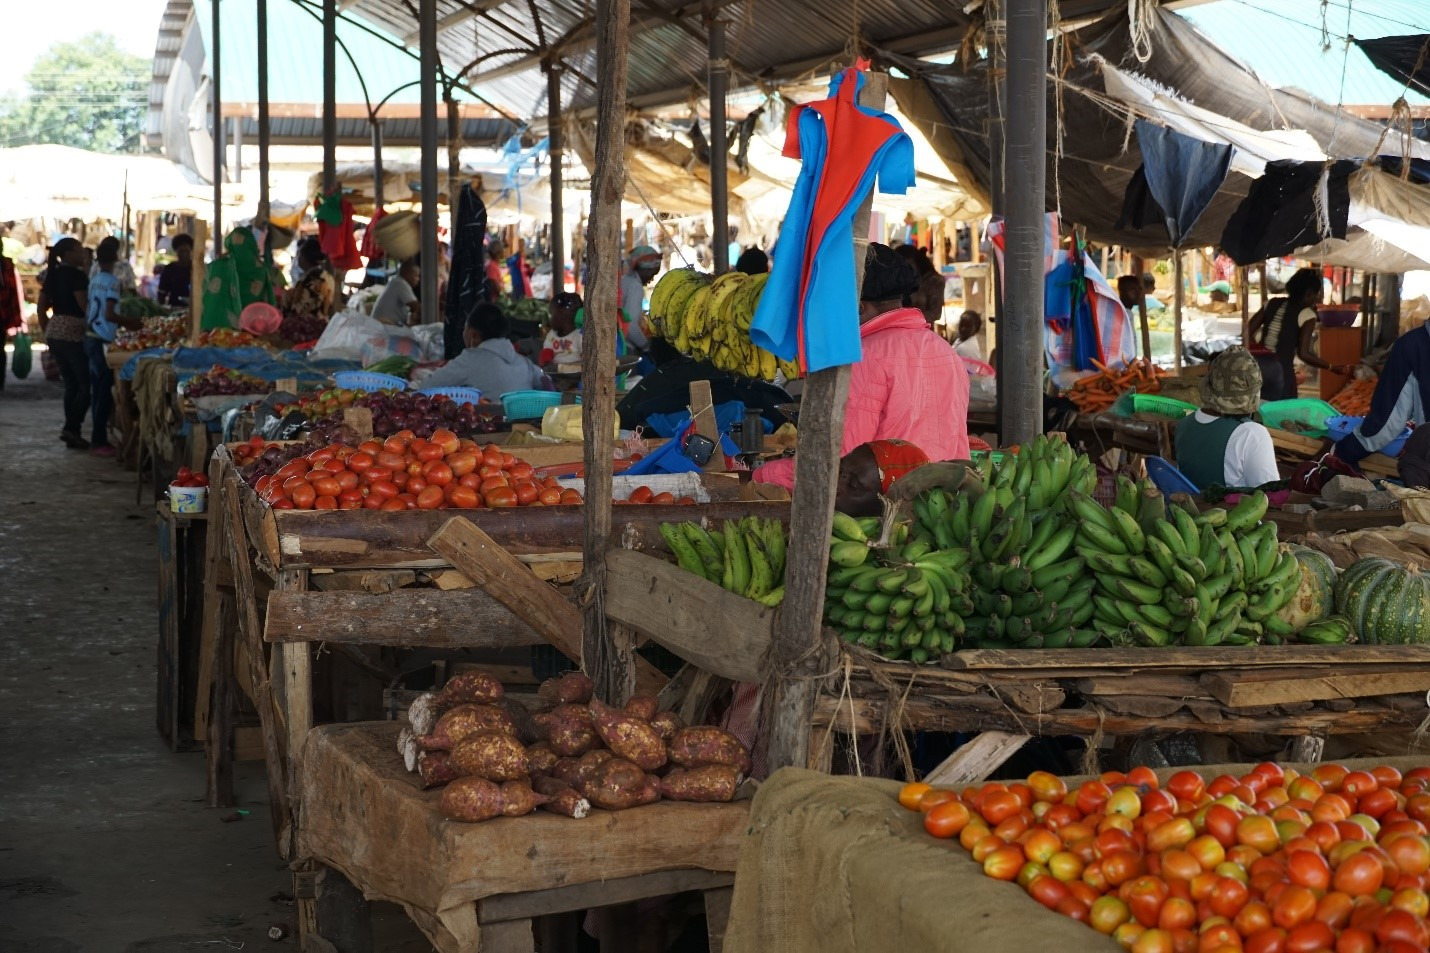 A traditional public market in Nanyuki, Kenya.